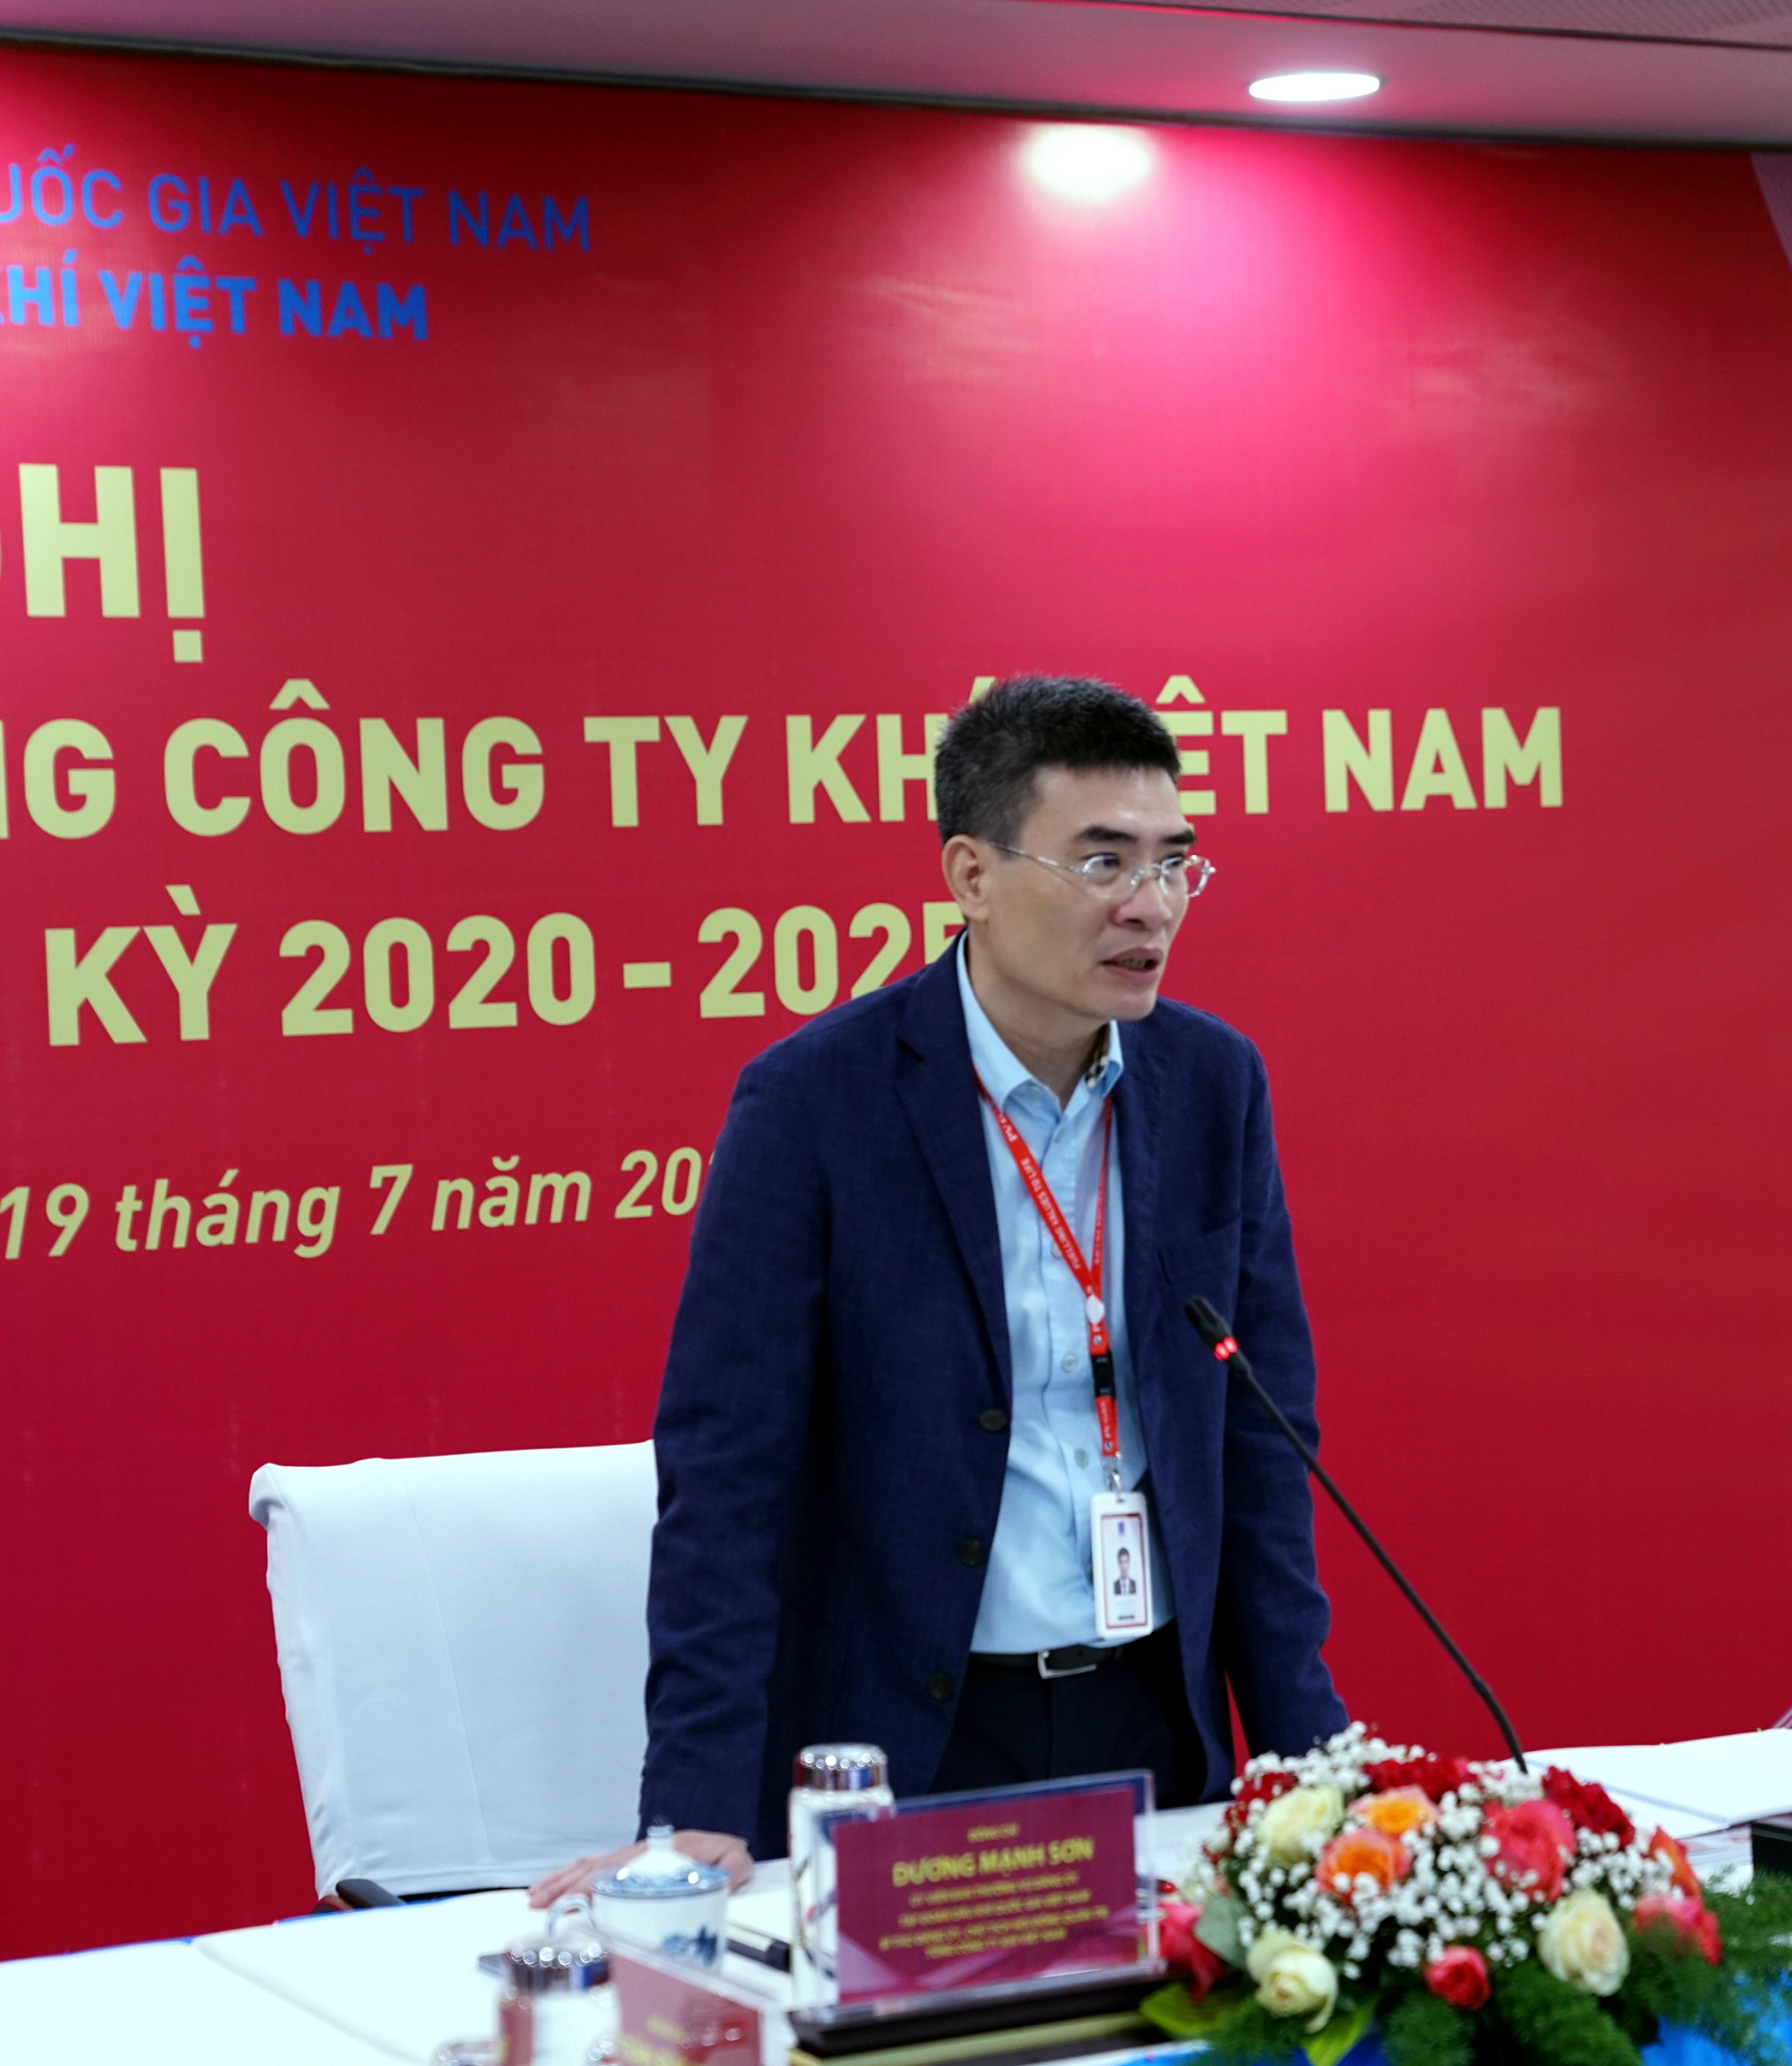 ban chap hanh dang bo pv gas to chuc hoi nghi thuong ky lan thu xii nhiem ky 2020  2025 hinh 1